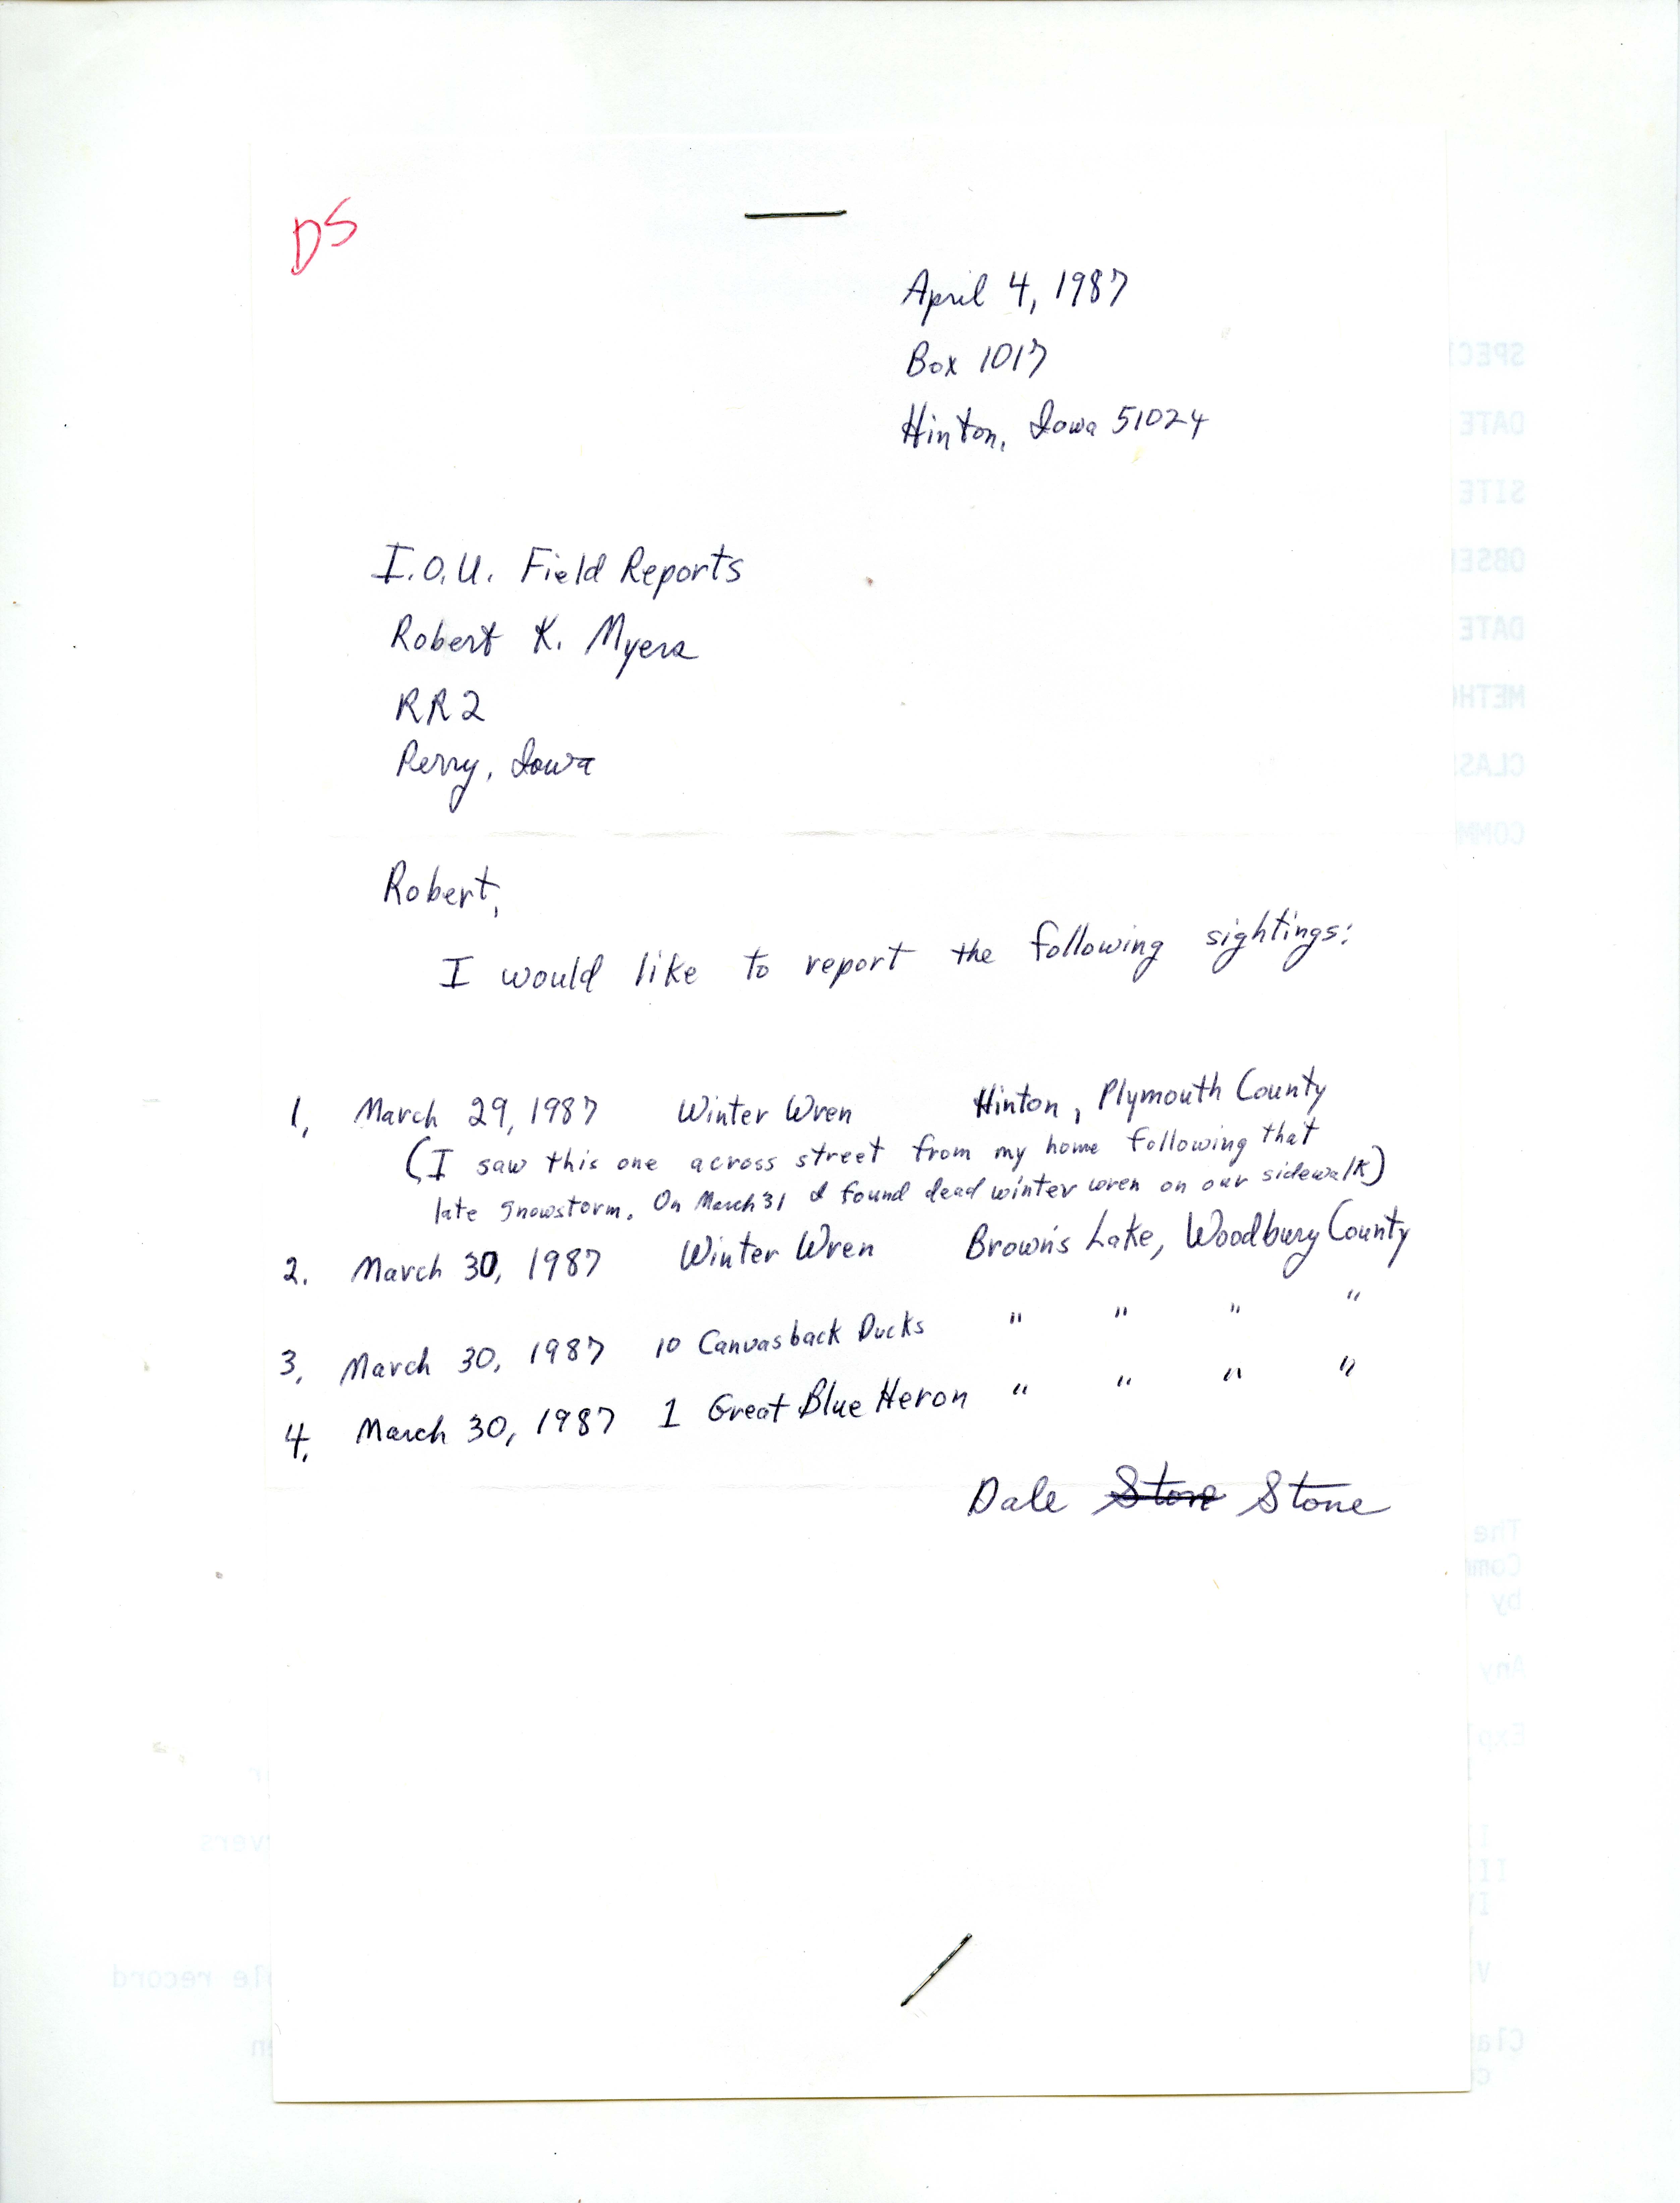 Dale Stone letter to Robert K. Myers regarding bird sightings, April 4, 1987